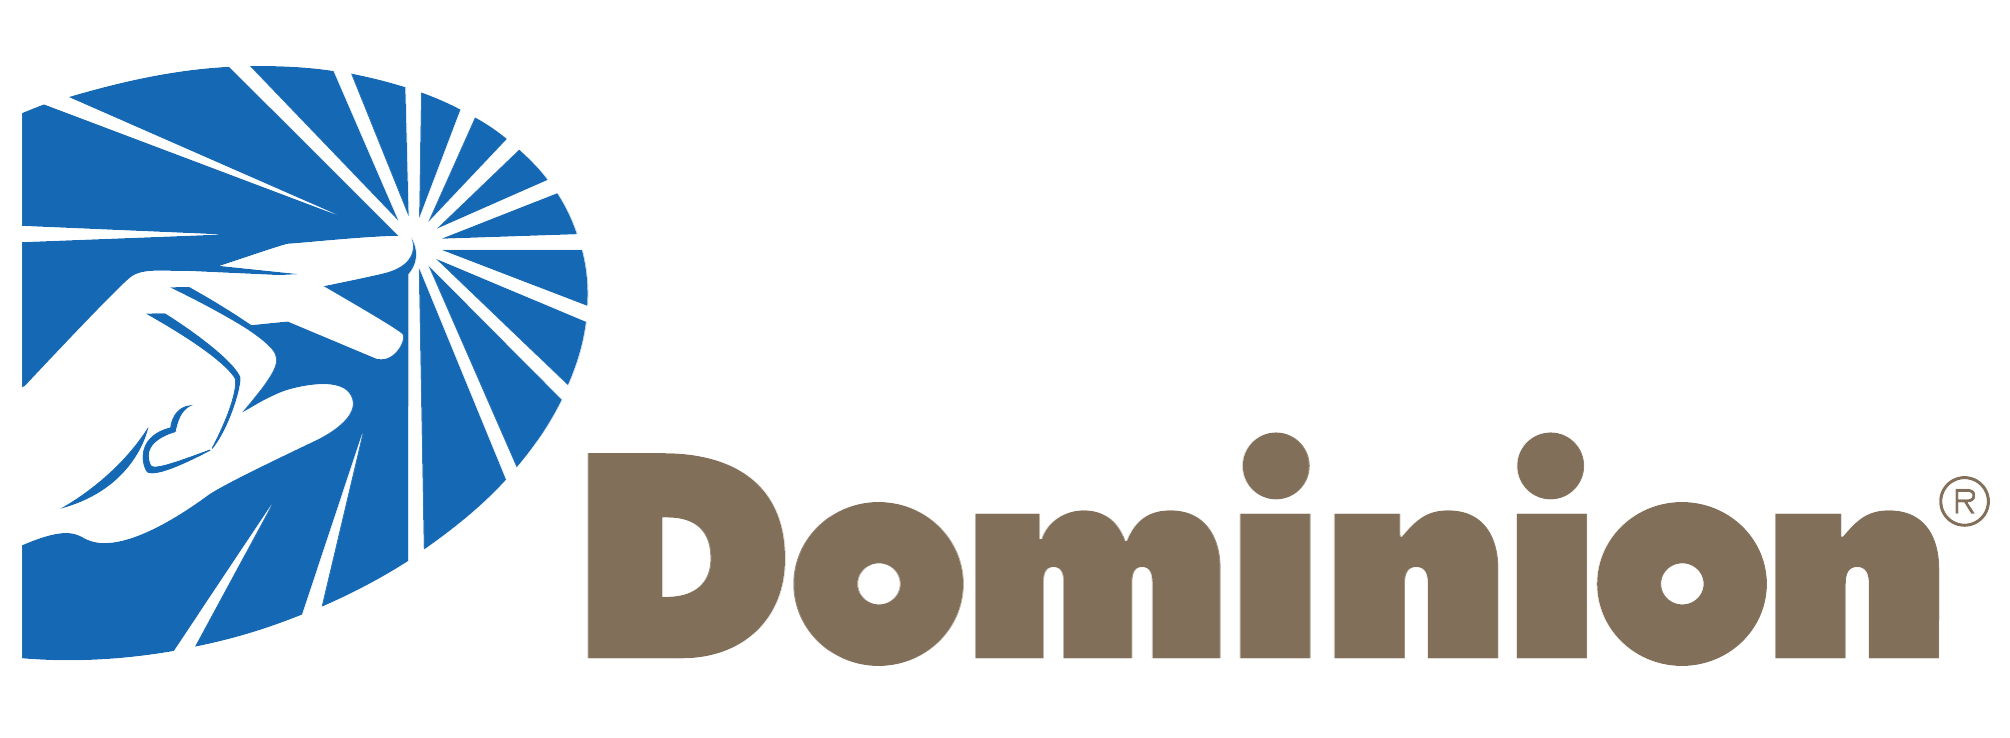 Enbridge (Formerly Dominion) logo